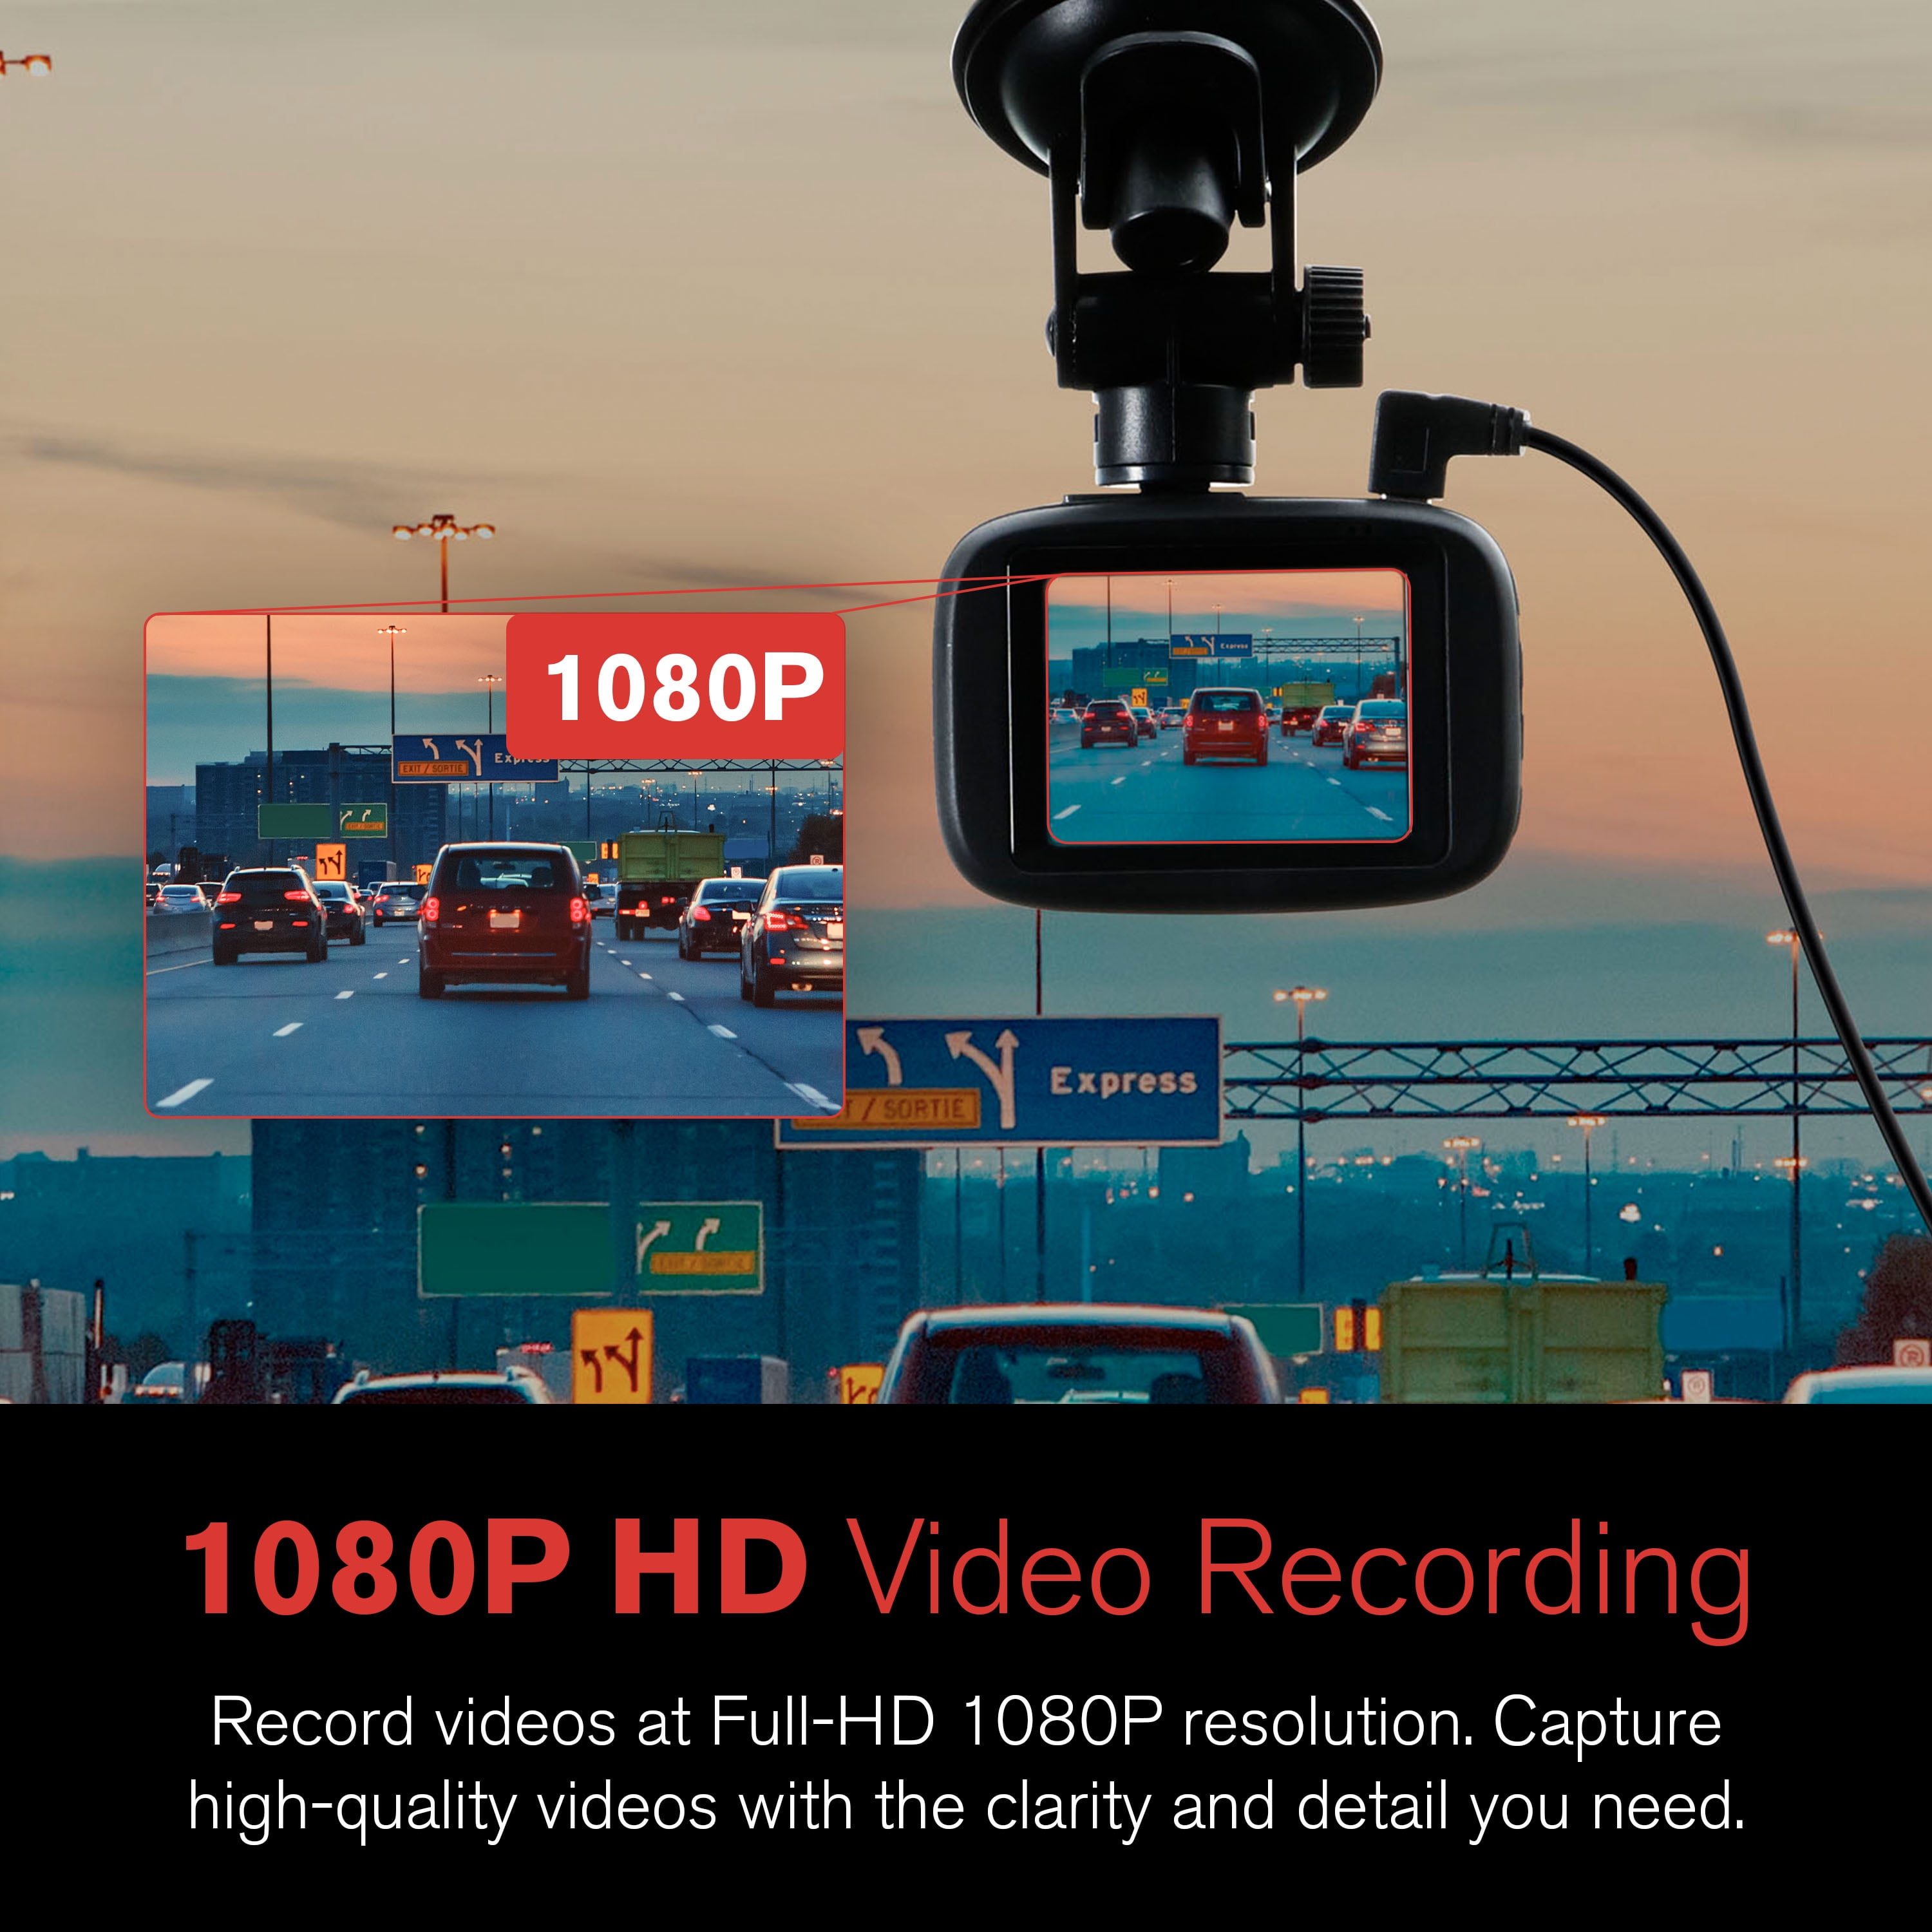 Yada 1080P RoadCam App-Controlled-BT58187 - Yada Auto Electronics